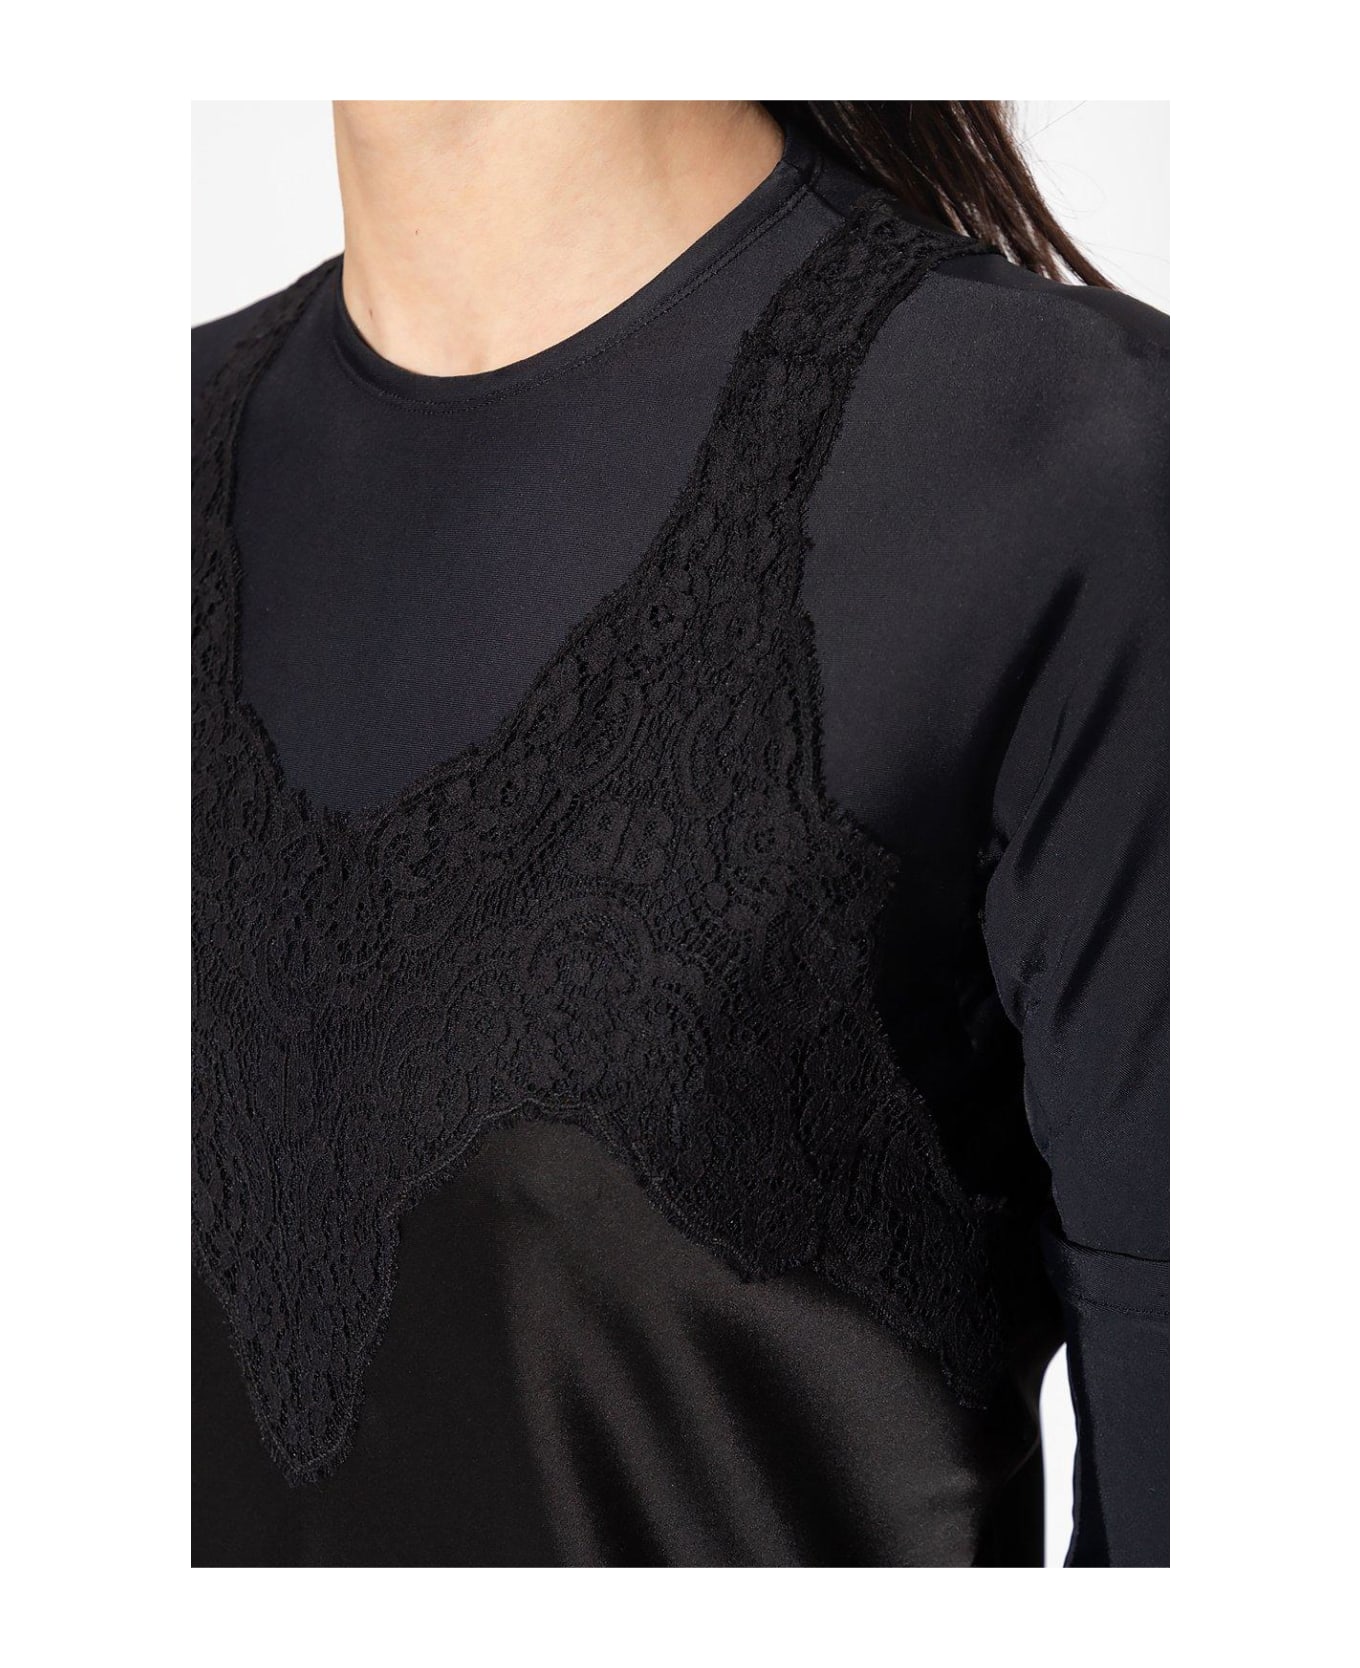 Balenciaga Satin Strappy Midi Dress - Black